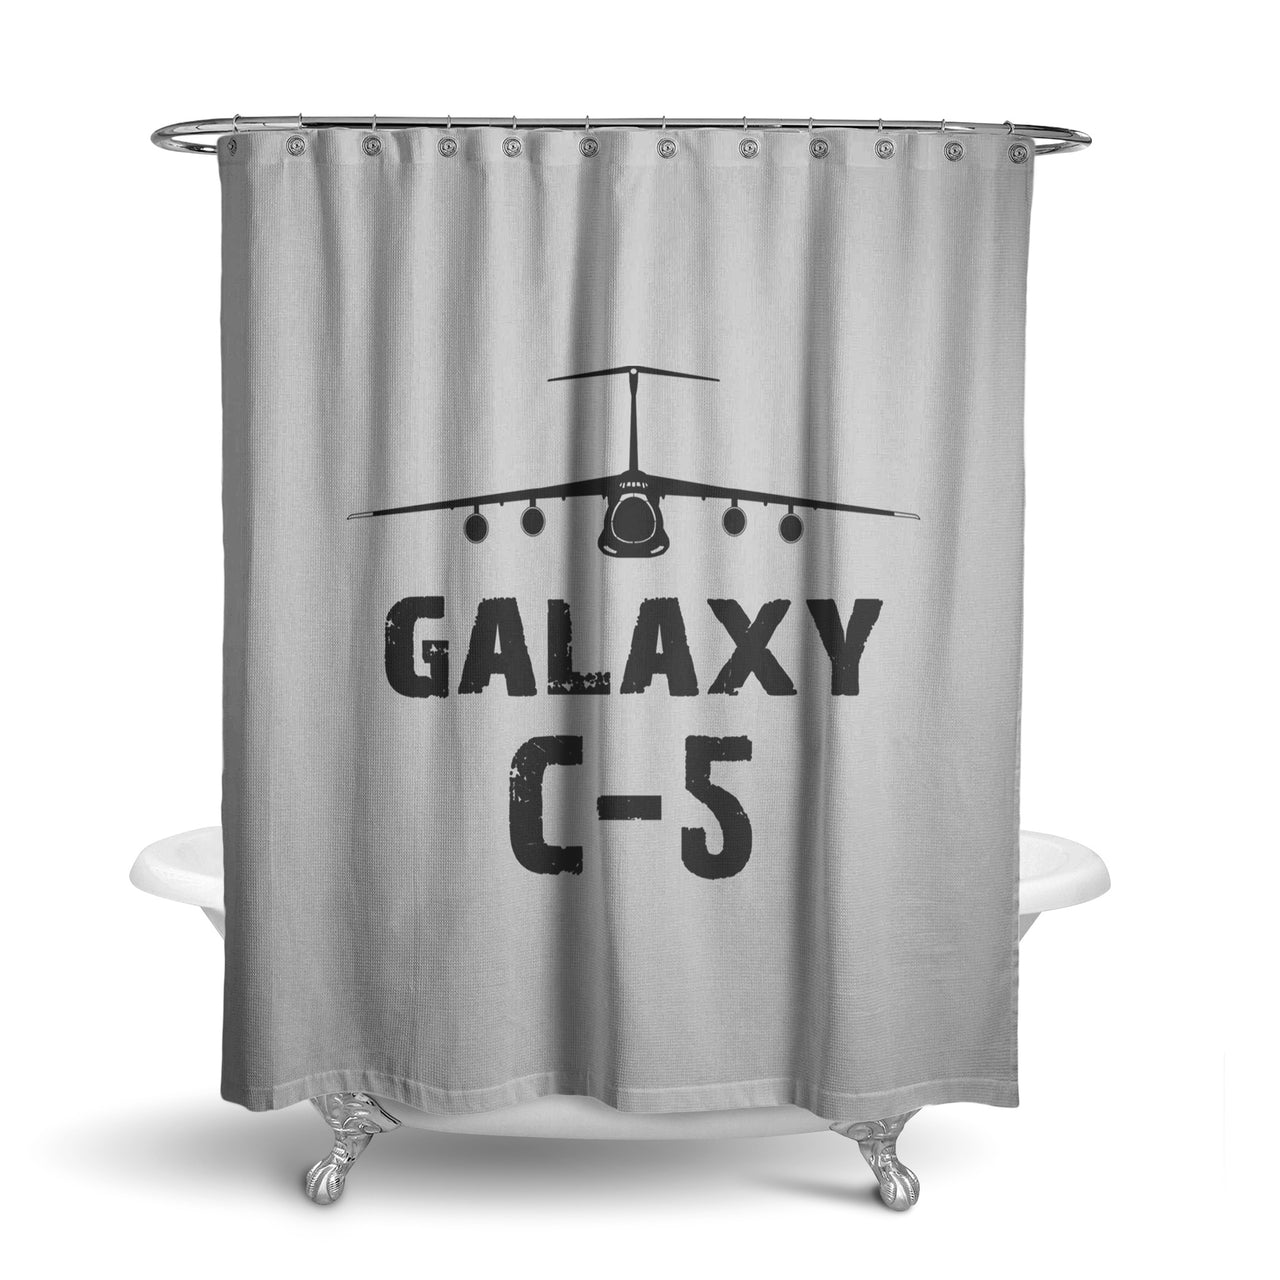 Galaxy C-5 & Plane Designed Shower Curtains